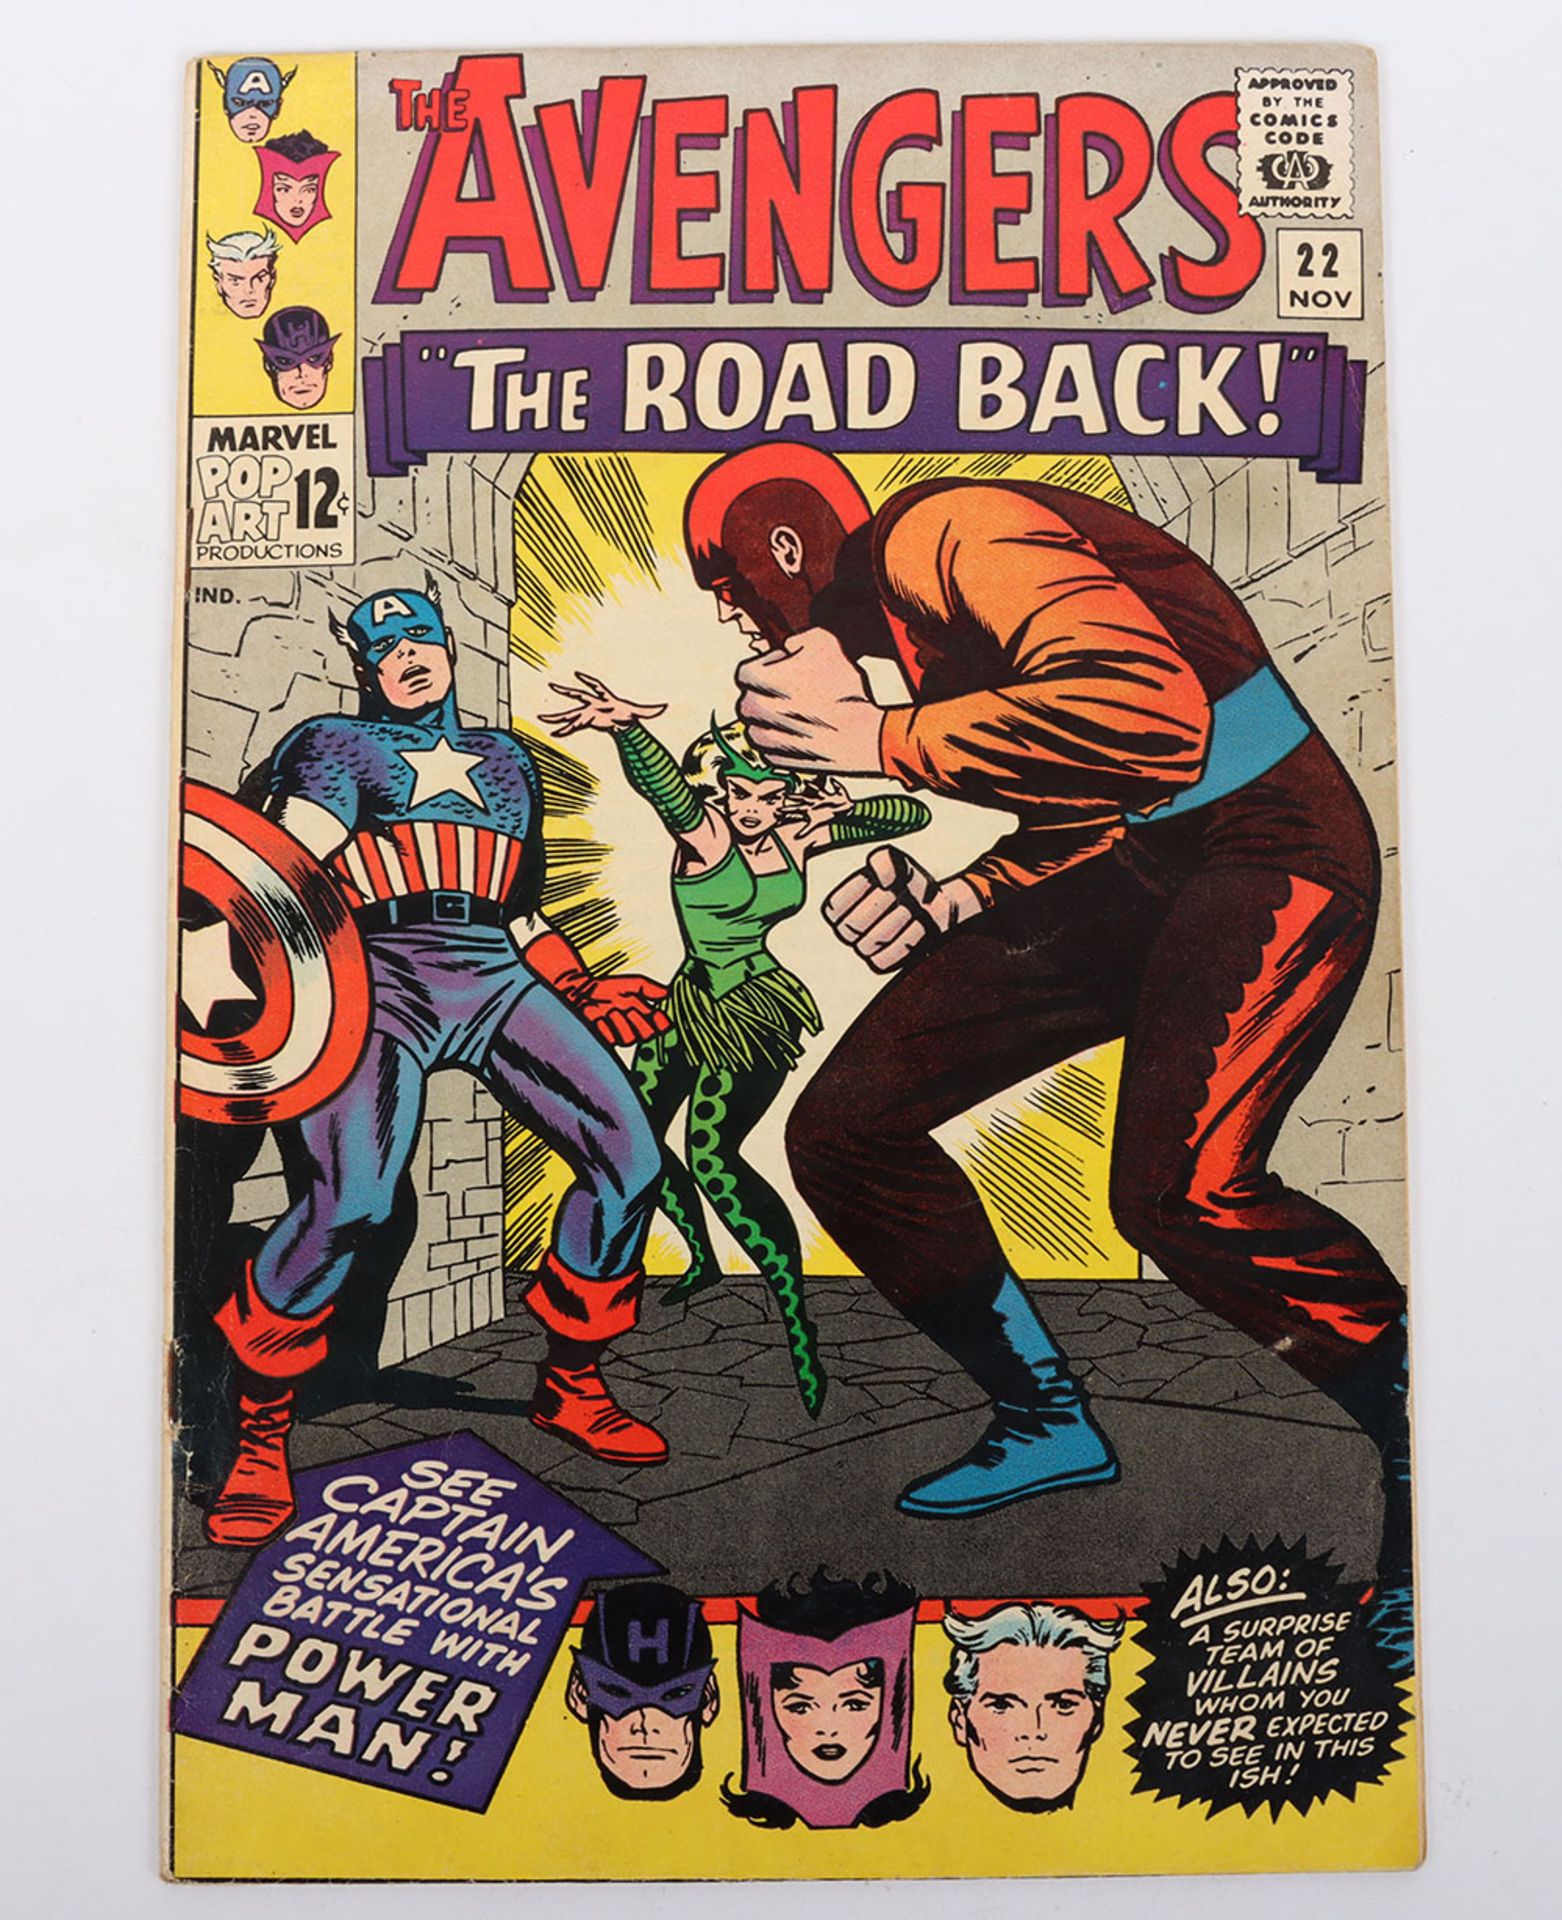 The Avengers The Road Back No.22  Marvel Silver Age Comics November 1965